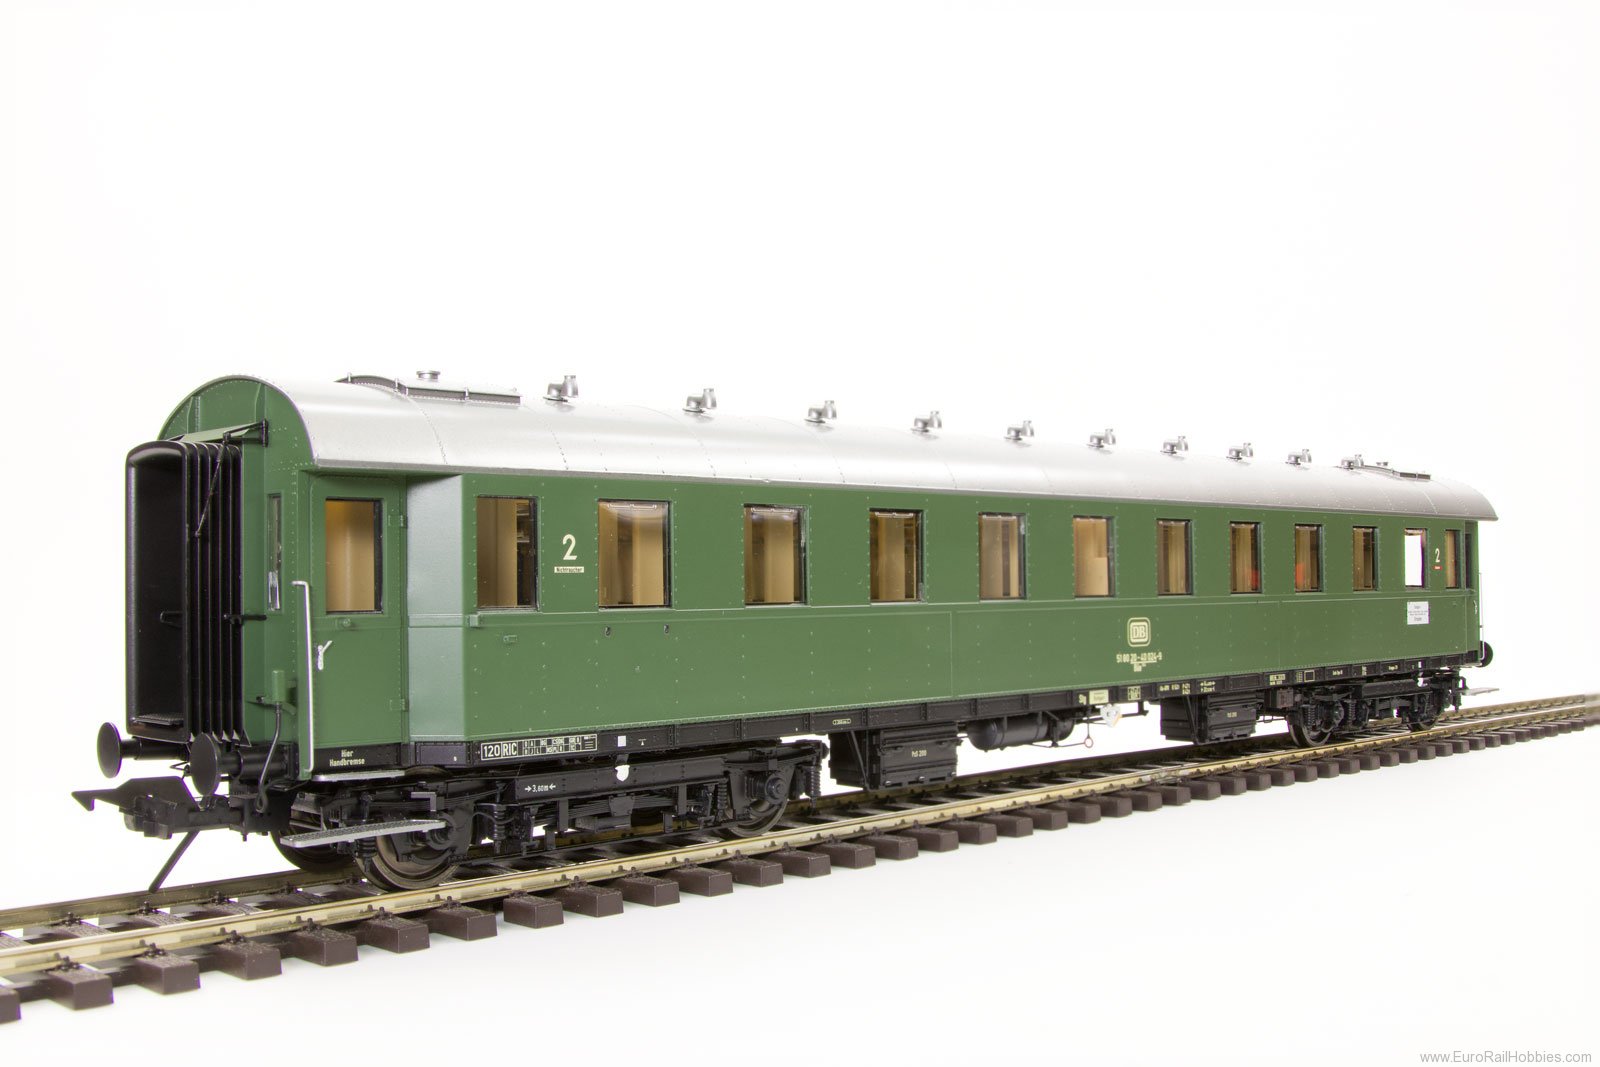 Lenz 41251.04 express train wagon size 29, 2nd class B4ue-2